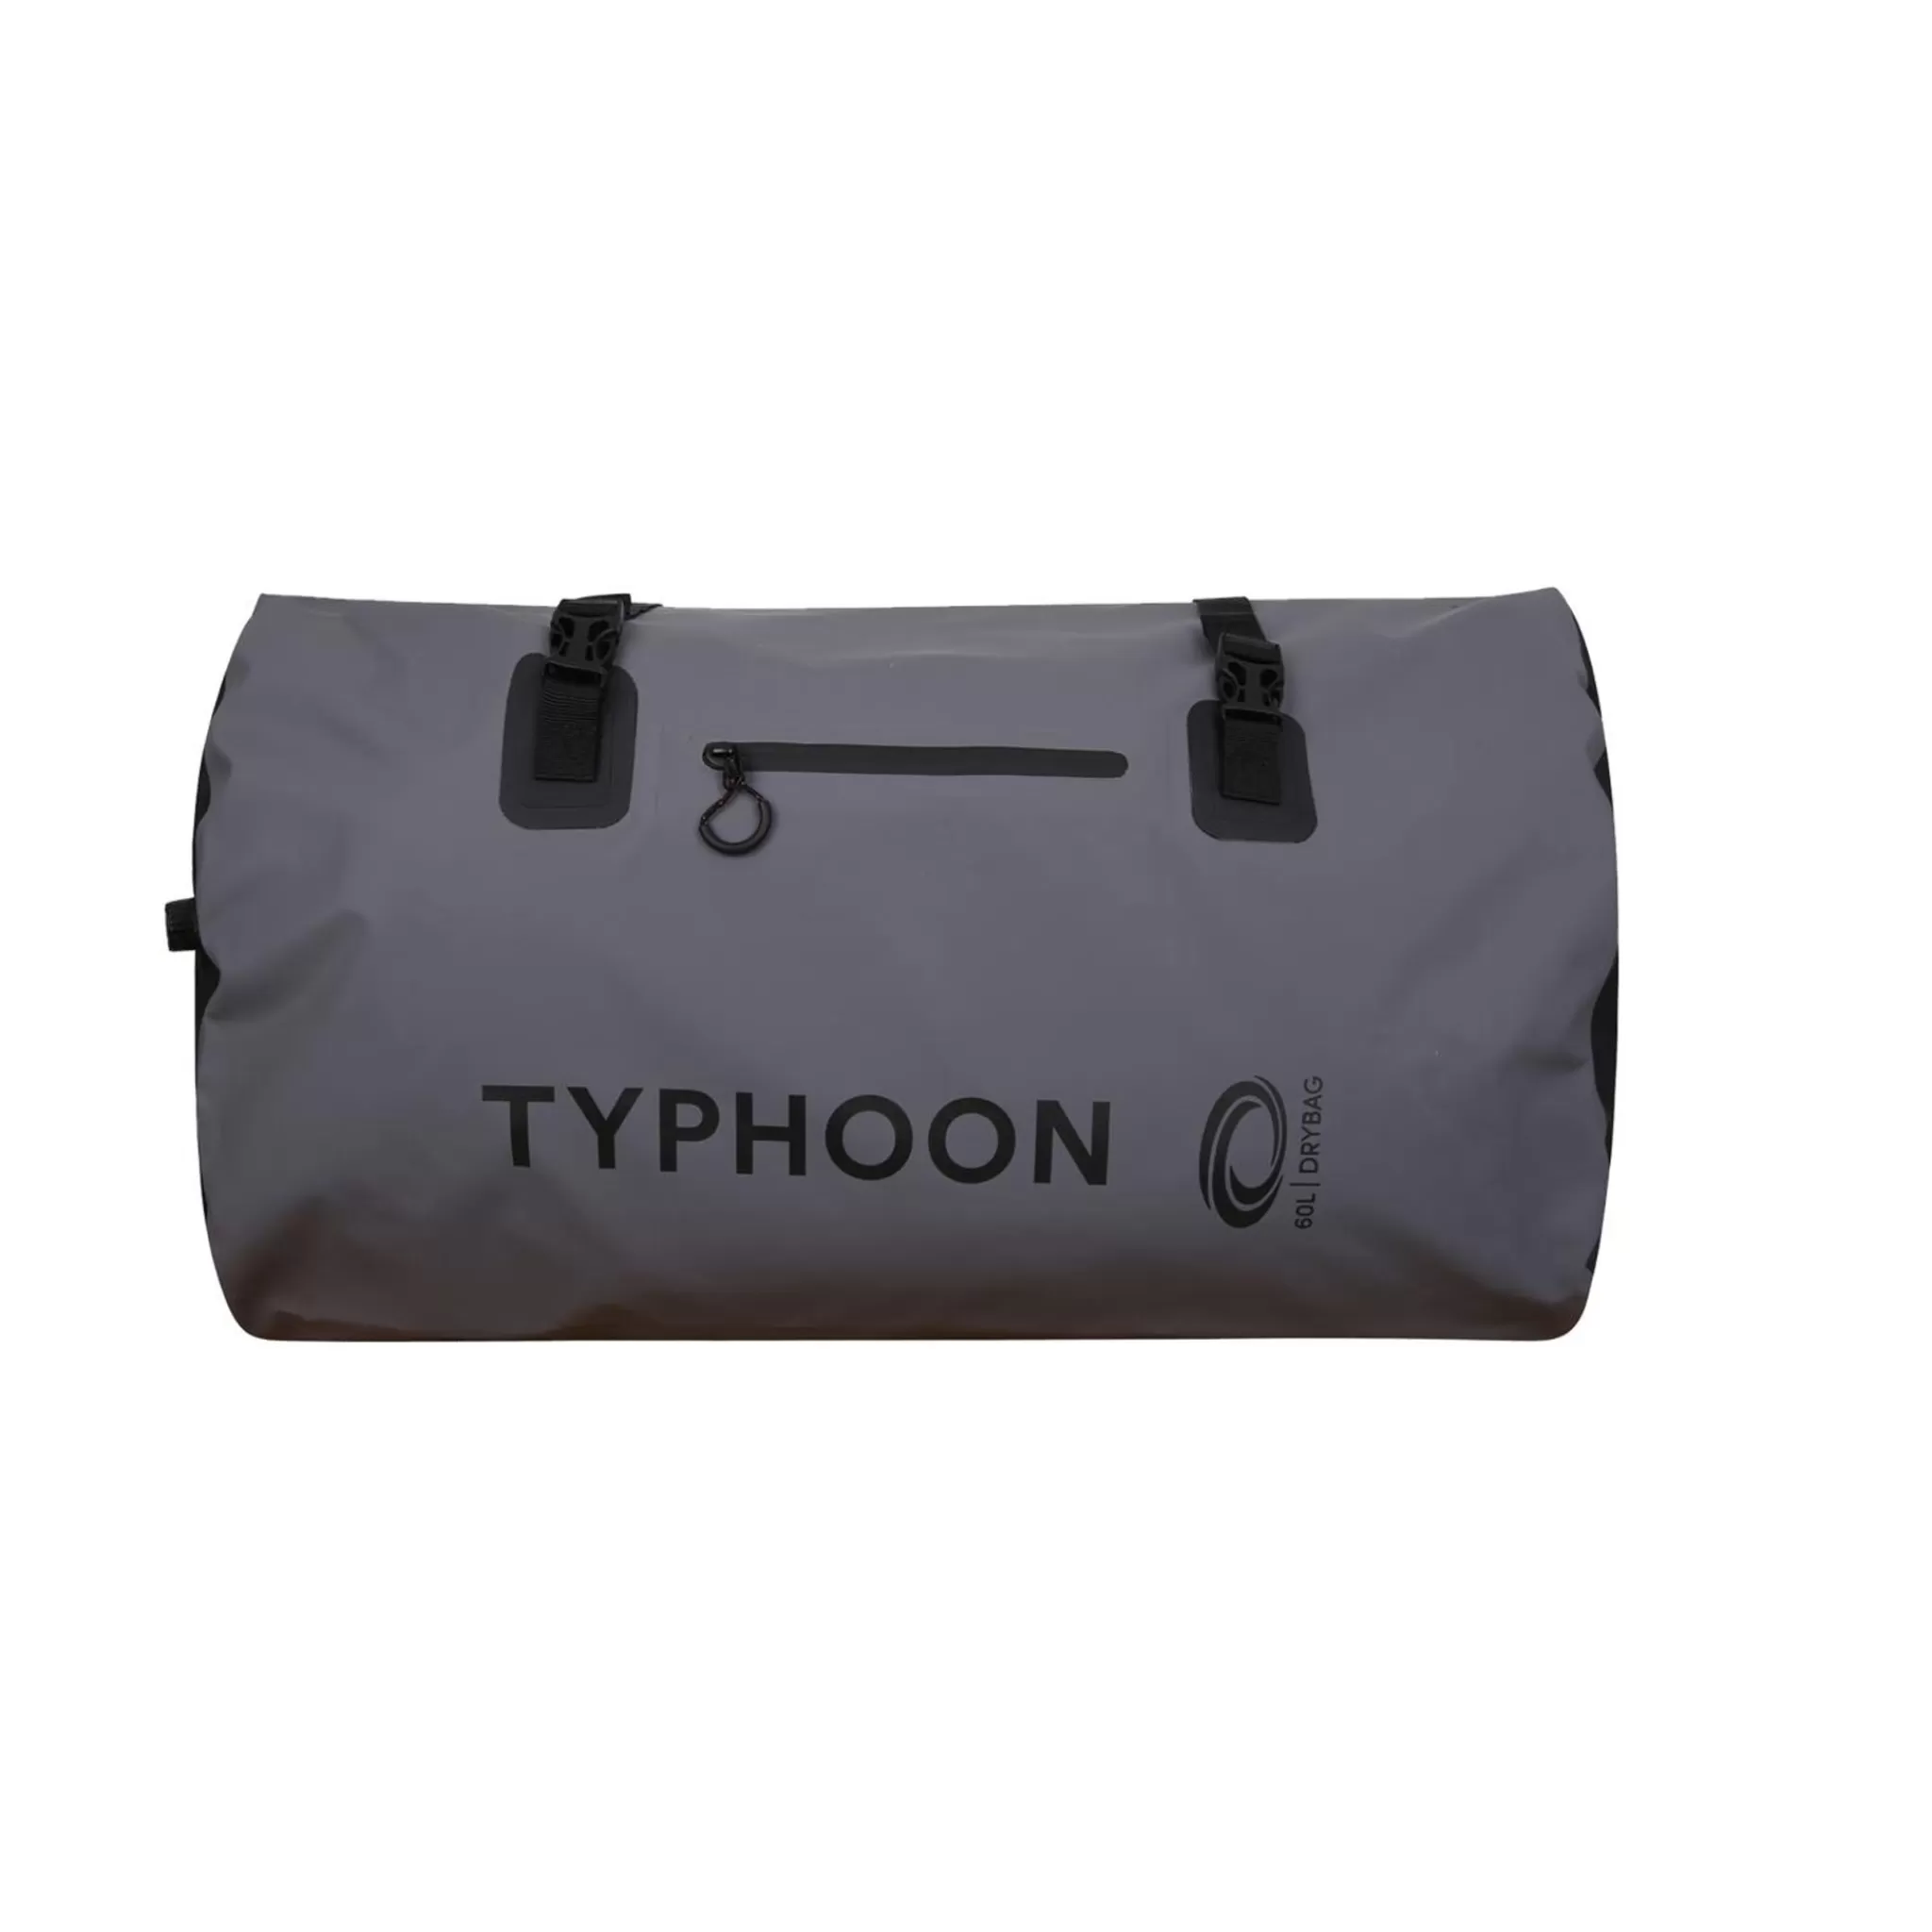 Flash Sale Typhoon Osea Dry Duffel - 60L, Vanntett Bag